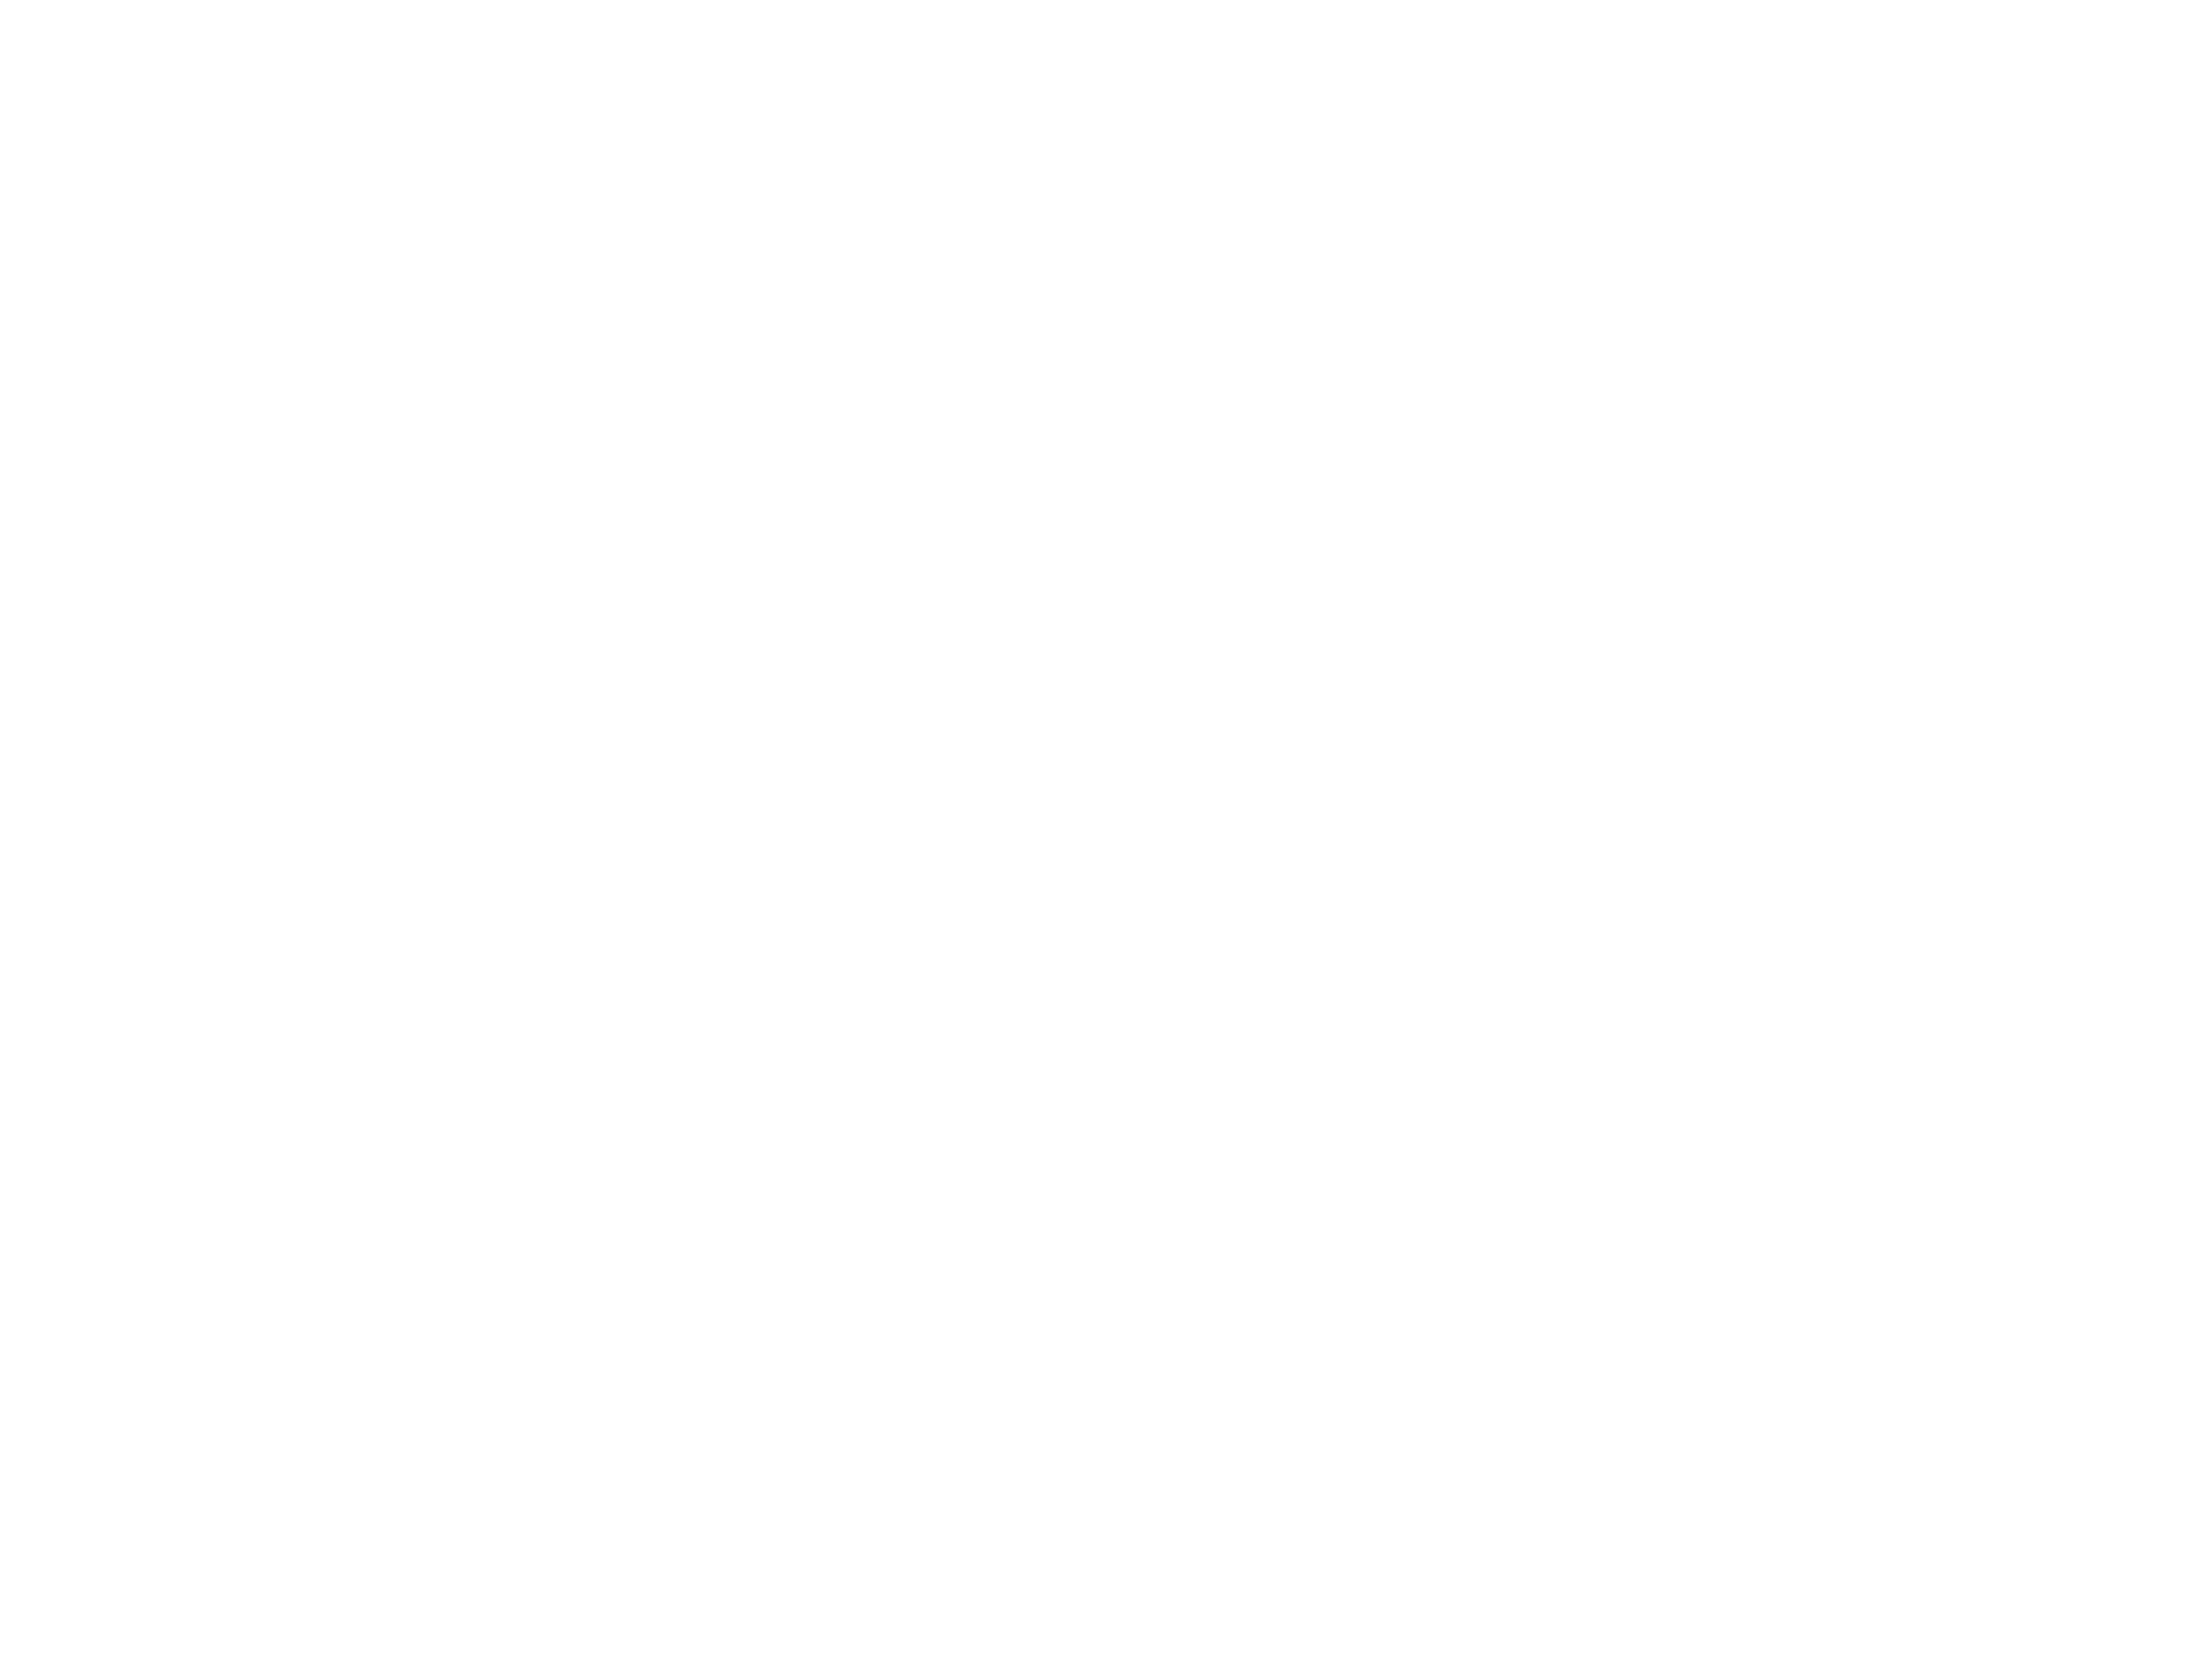 Gothics Land